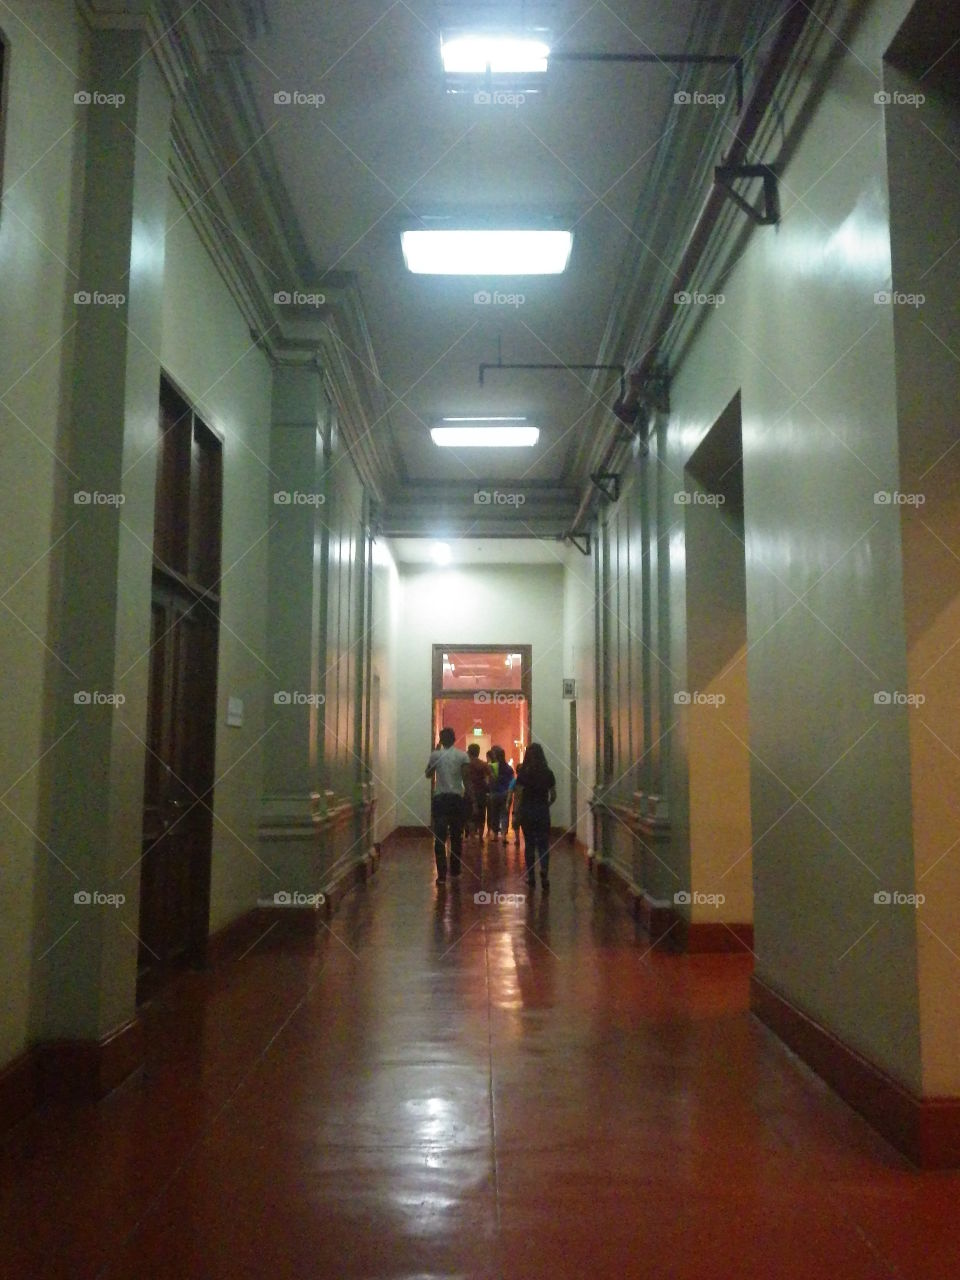 at the hallway